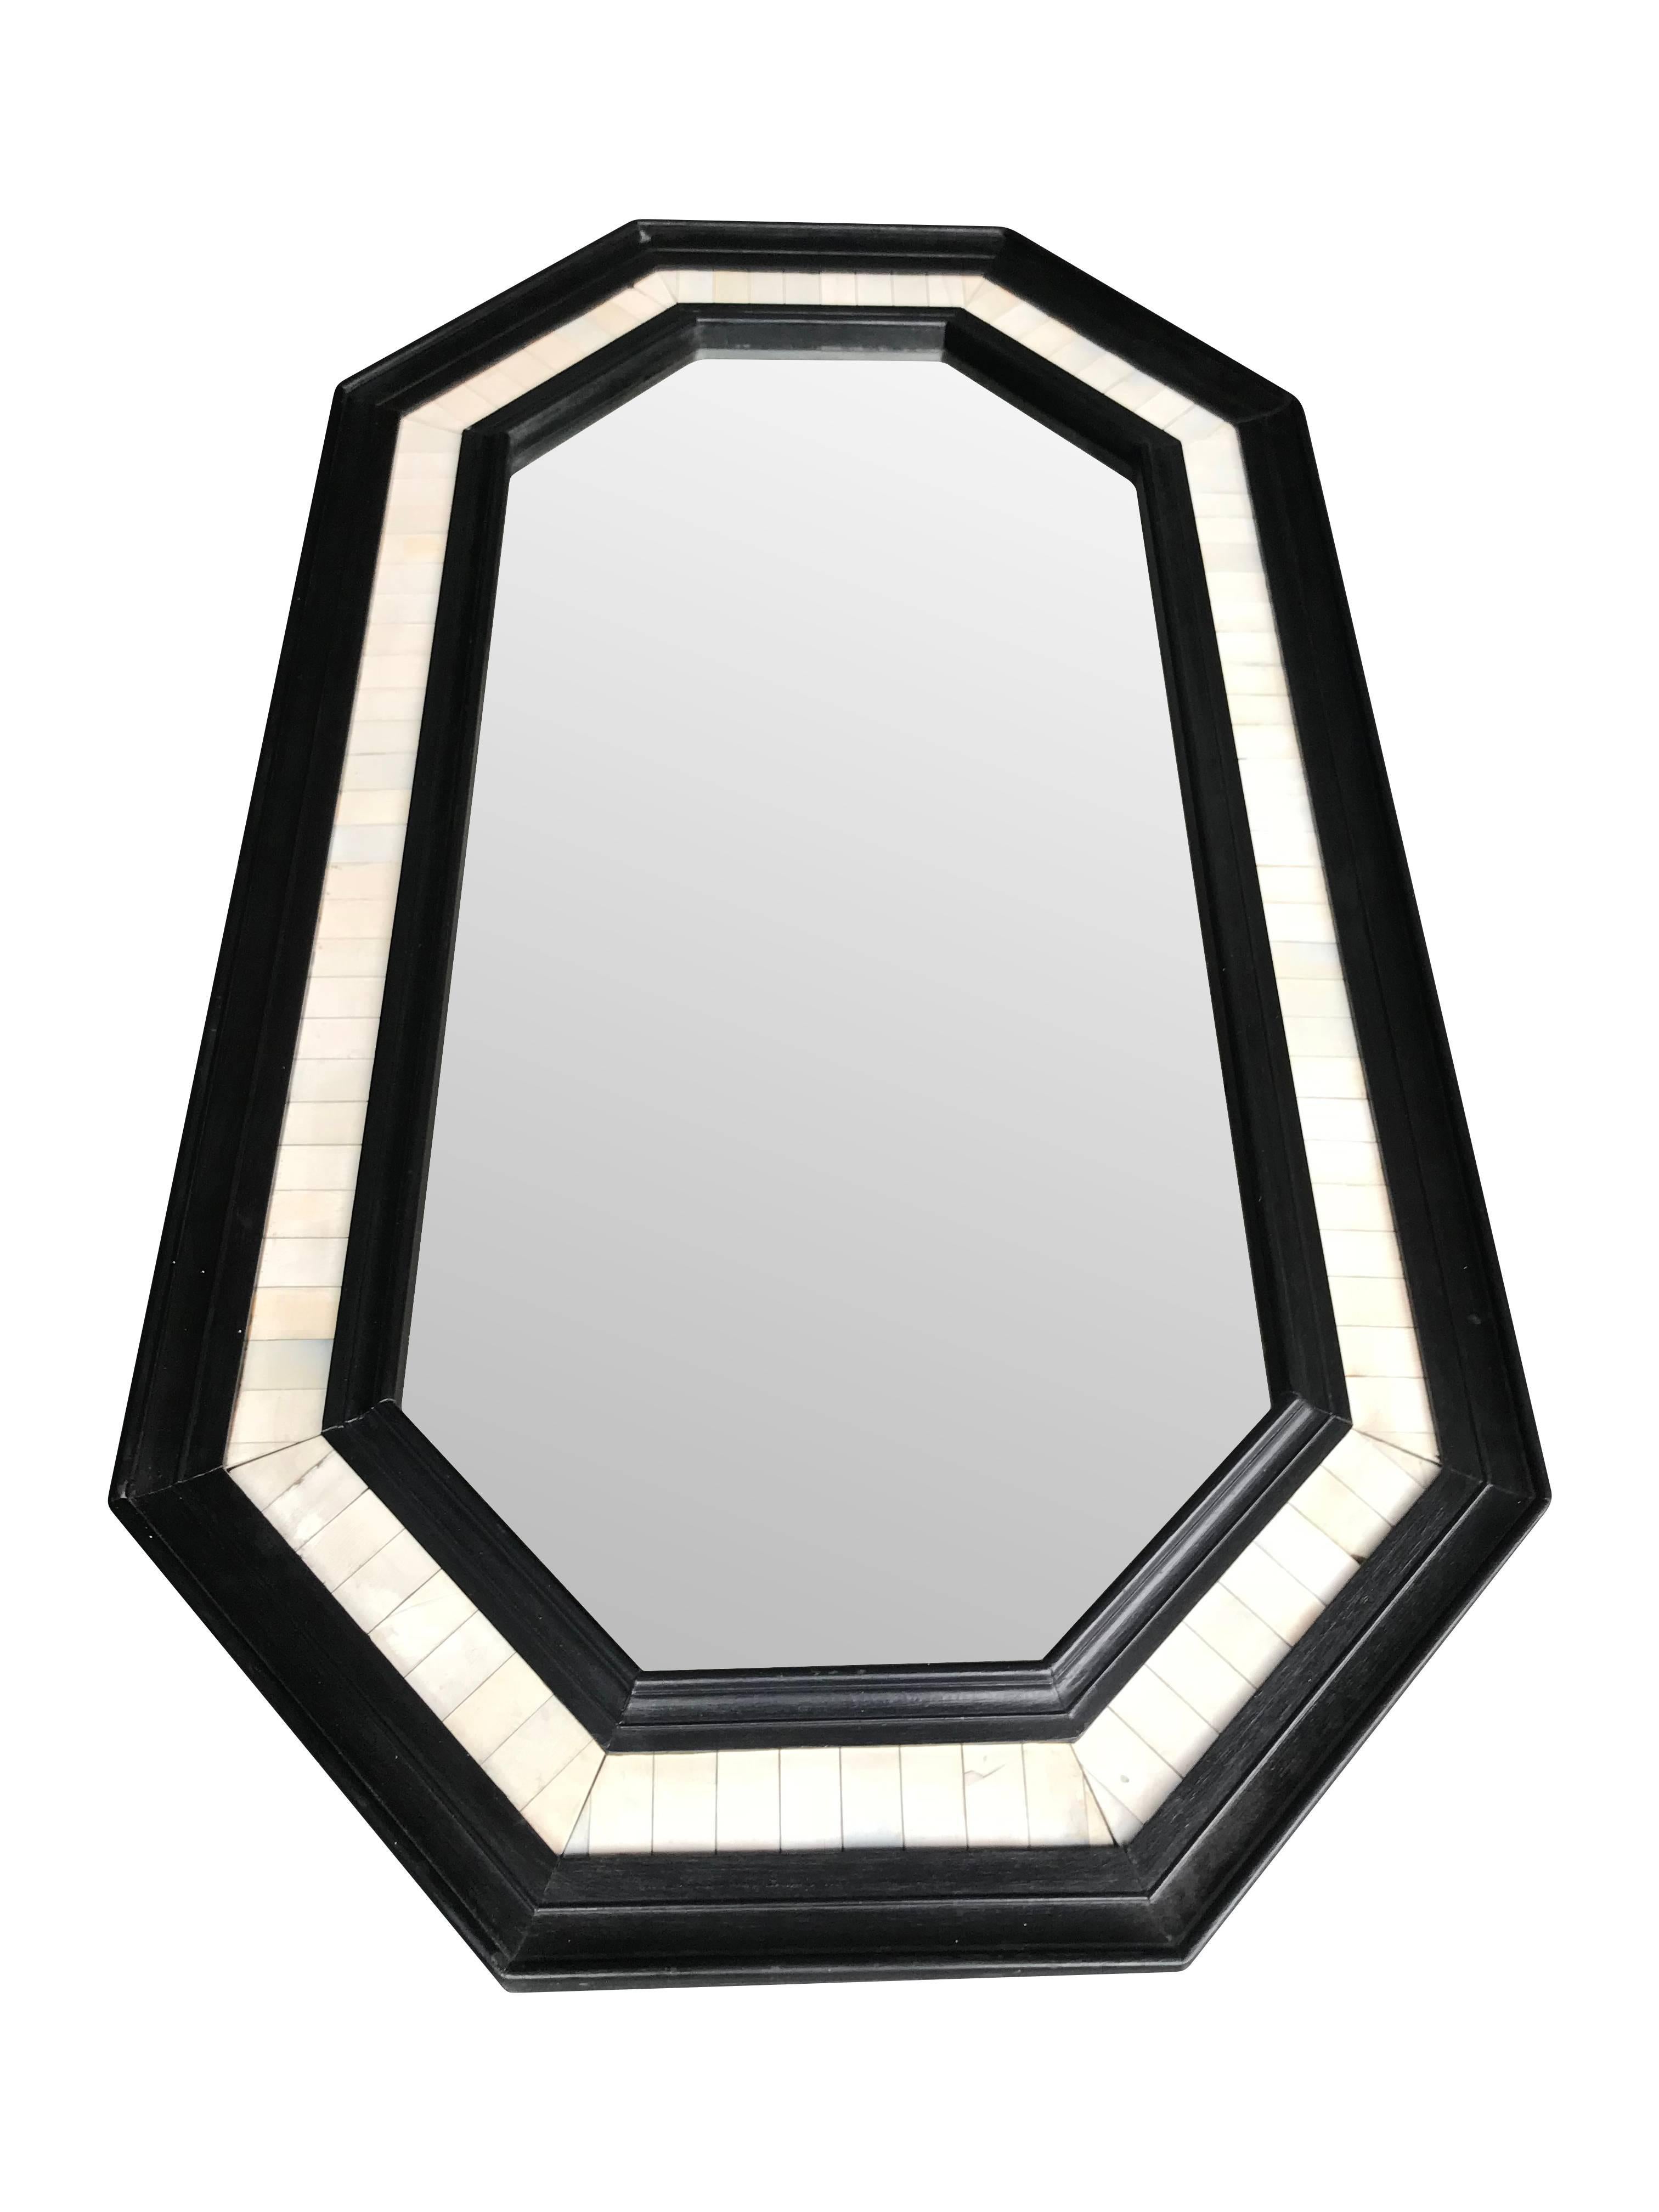 French Octagonal Ebonized Wooden Framed Mirror with Bone Inlay Surround